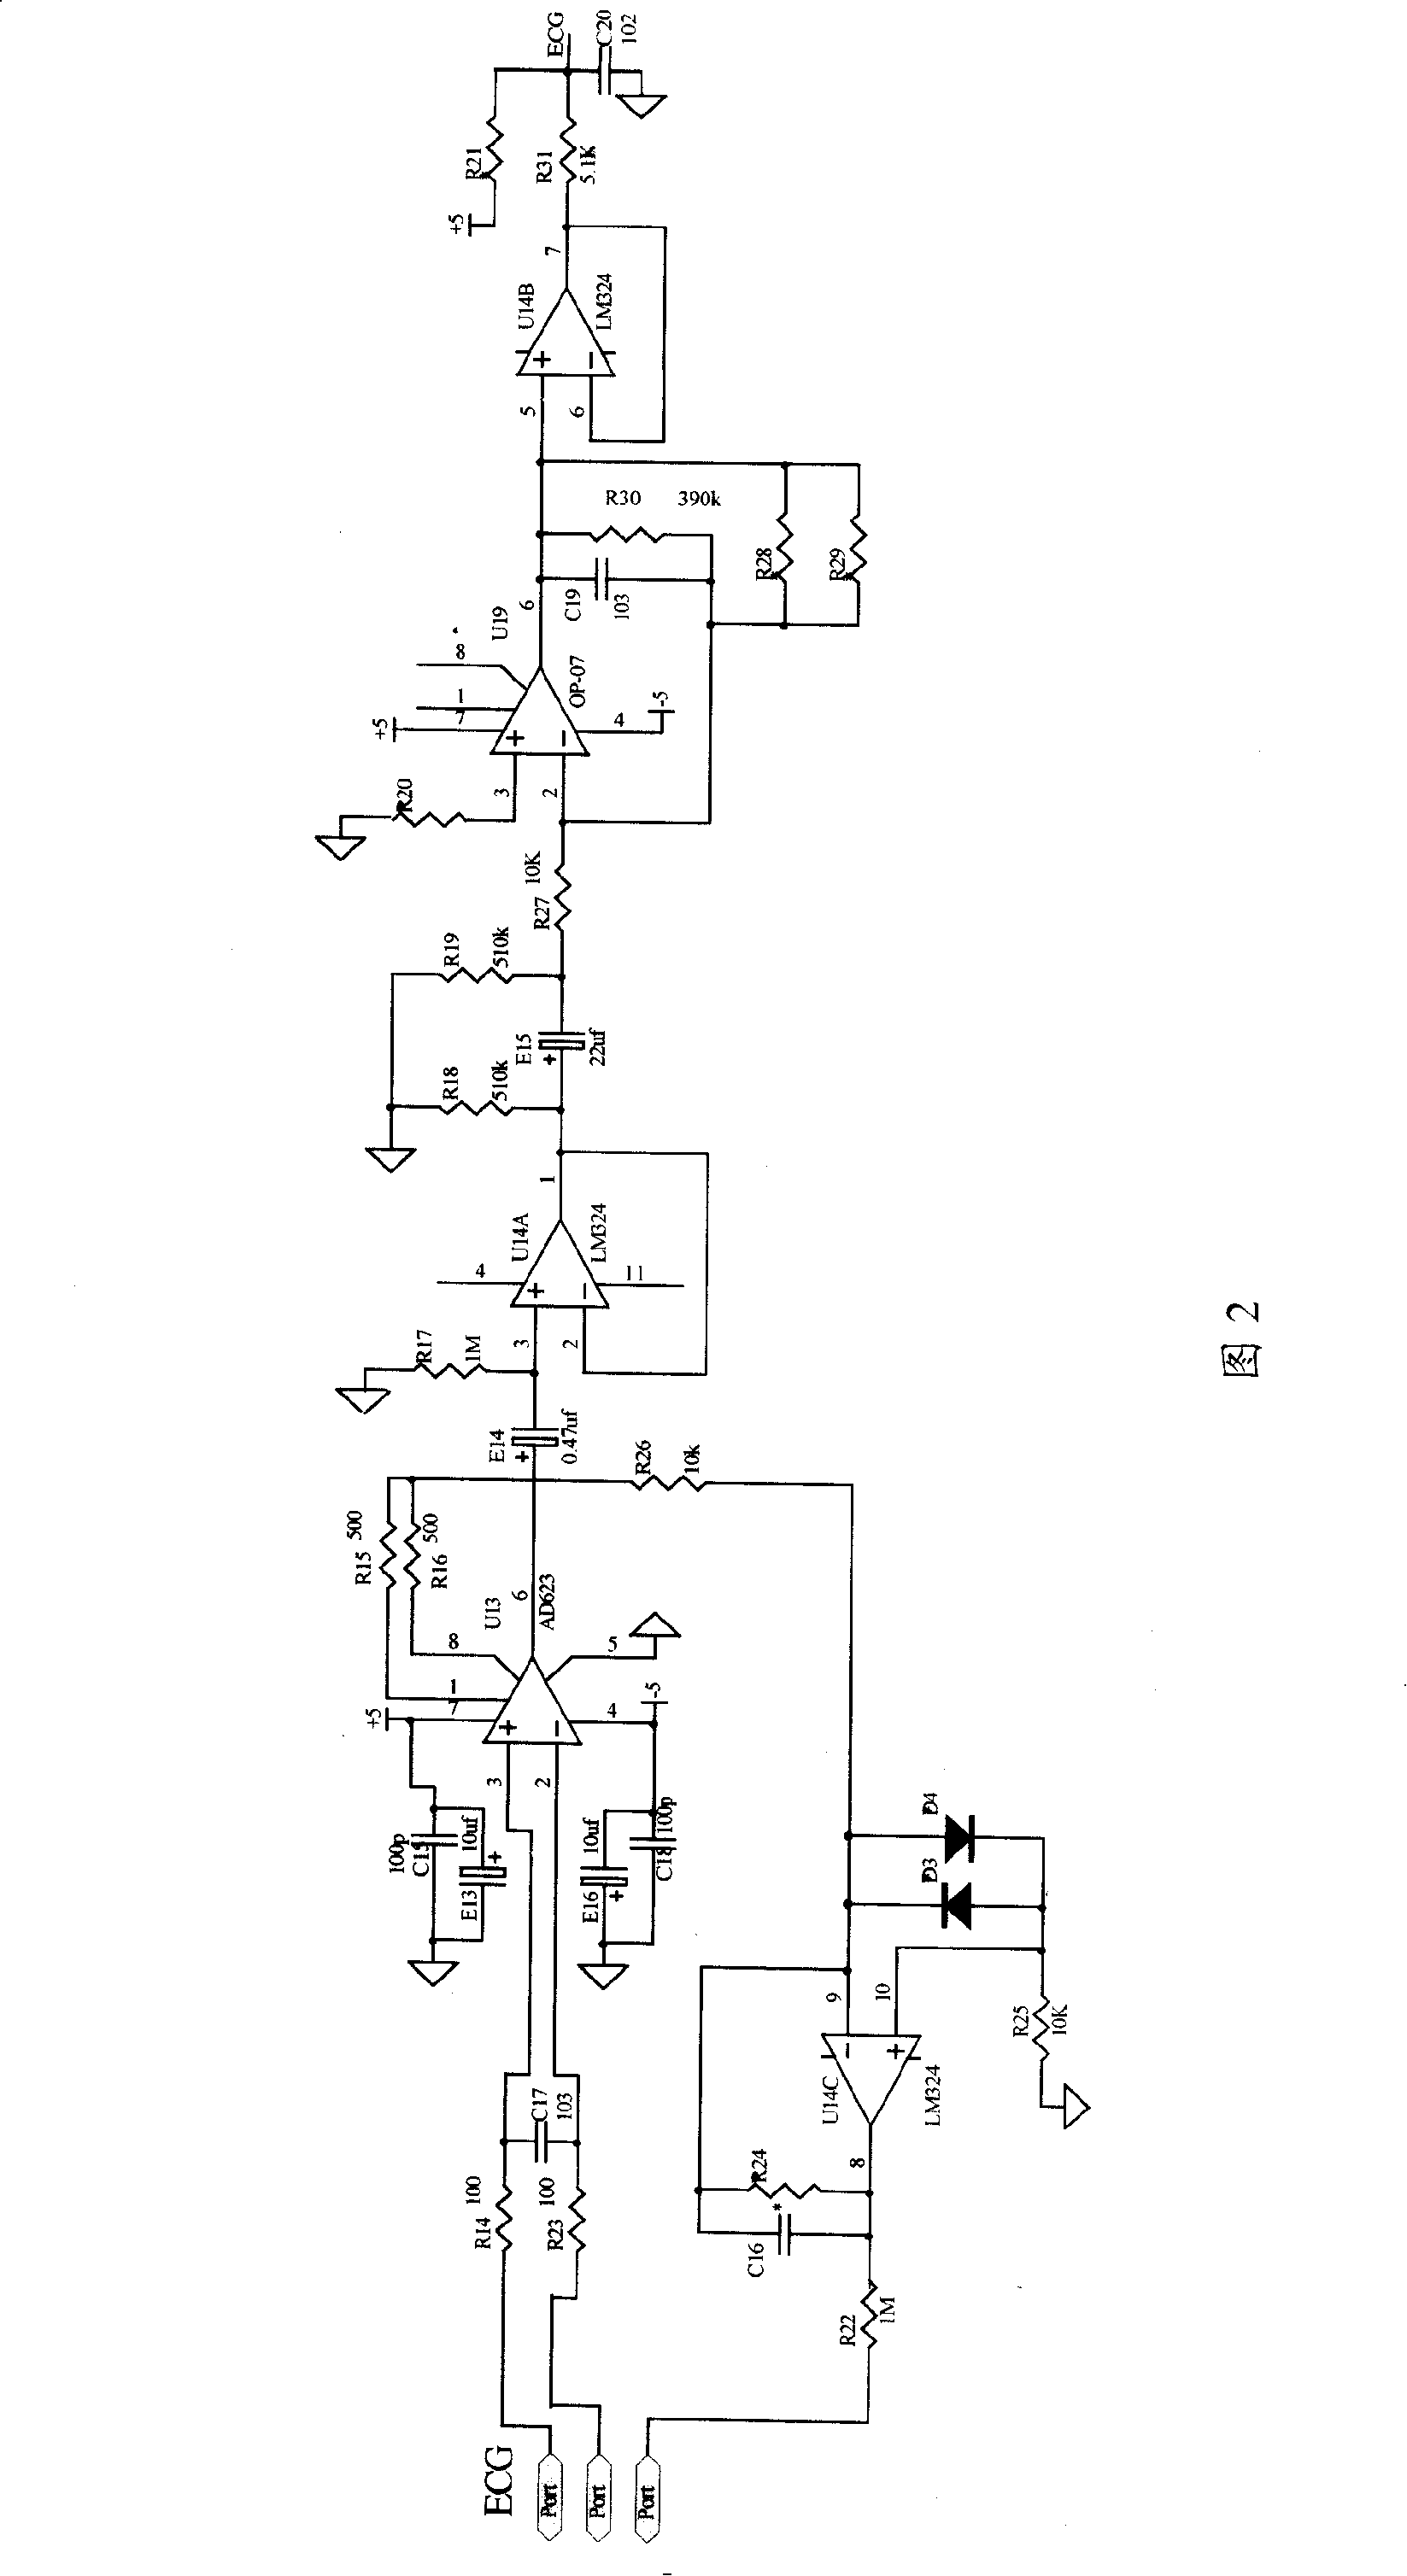 Multi-parameter transmission apparatus for telemonitoring